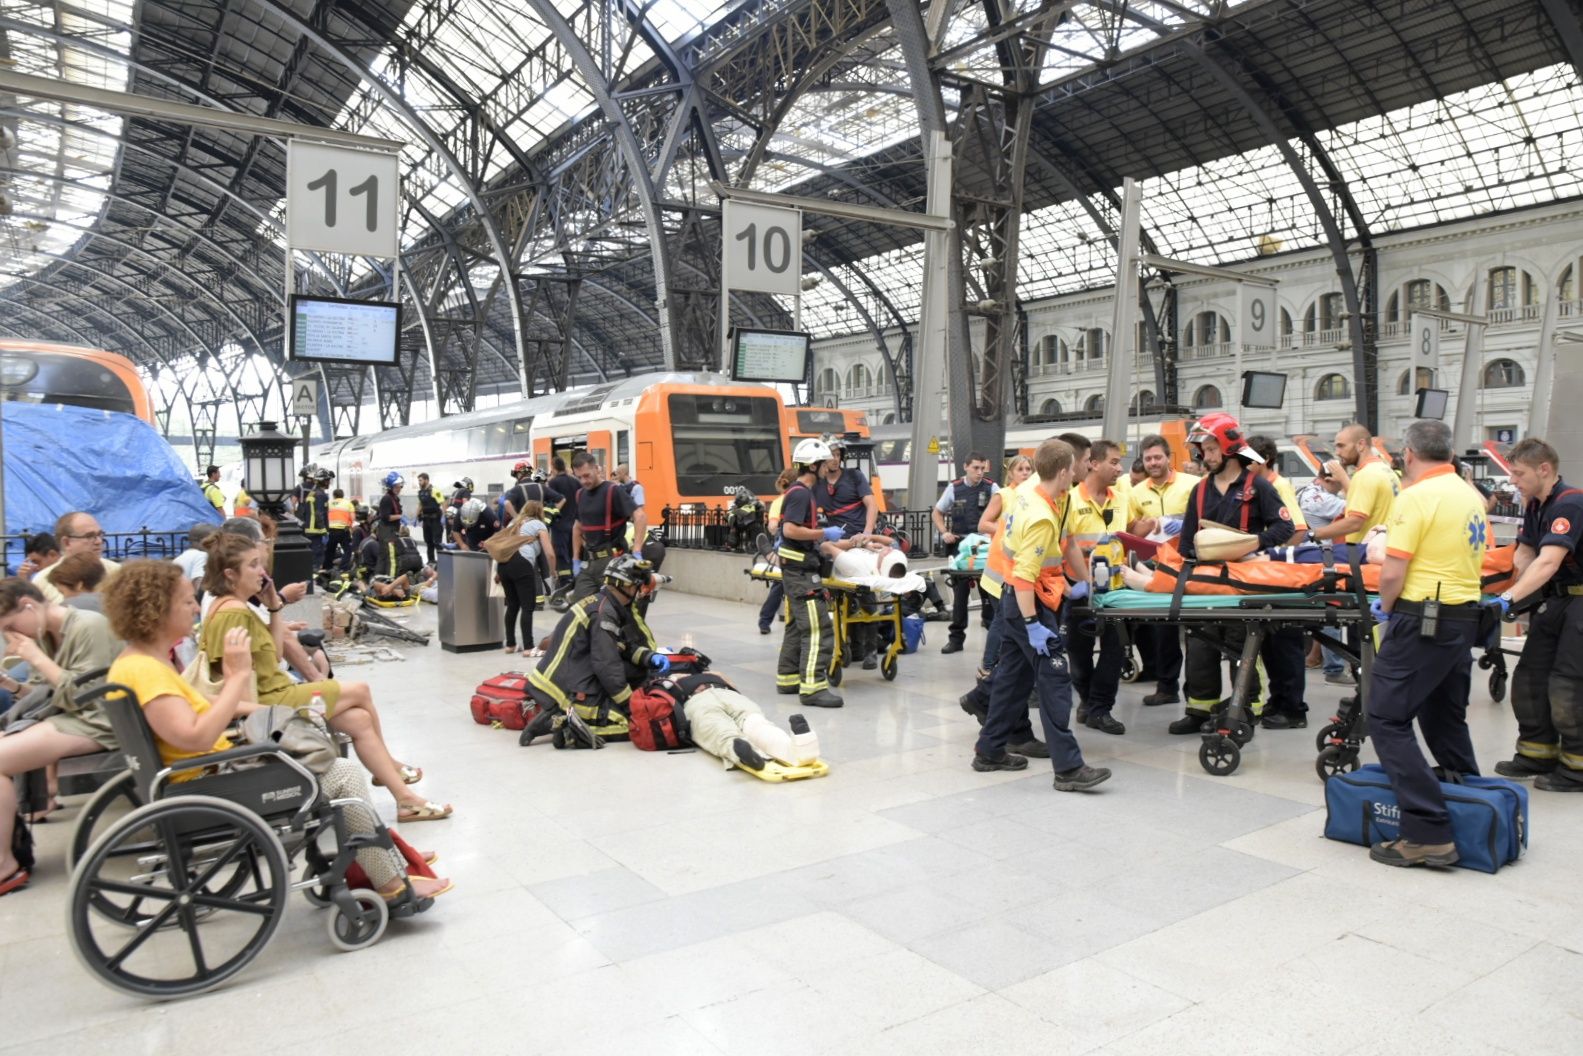 Over 50 injured in a train accident at Barcelona's França Station